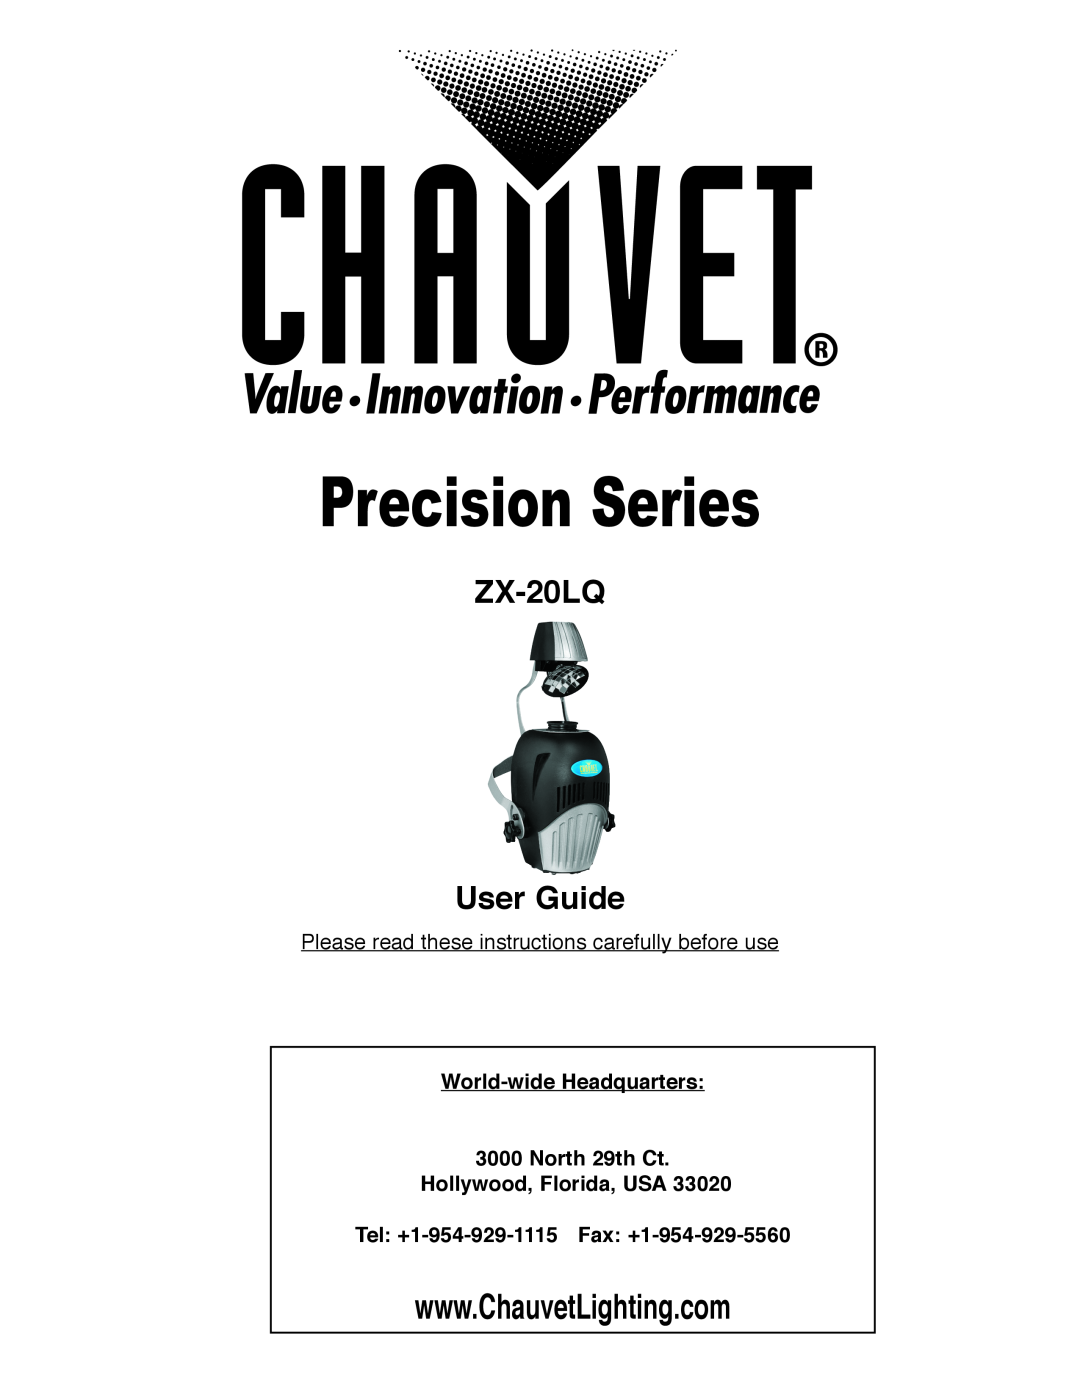 Chauvet ZX-20LQ manual World-wideHeadquarters 3000 North 29th Ct, Hollywood, Florida, USA, Precision Series 